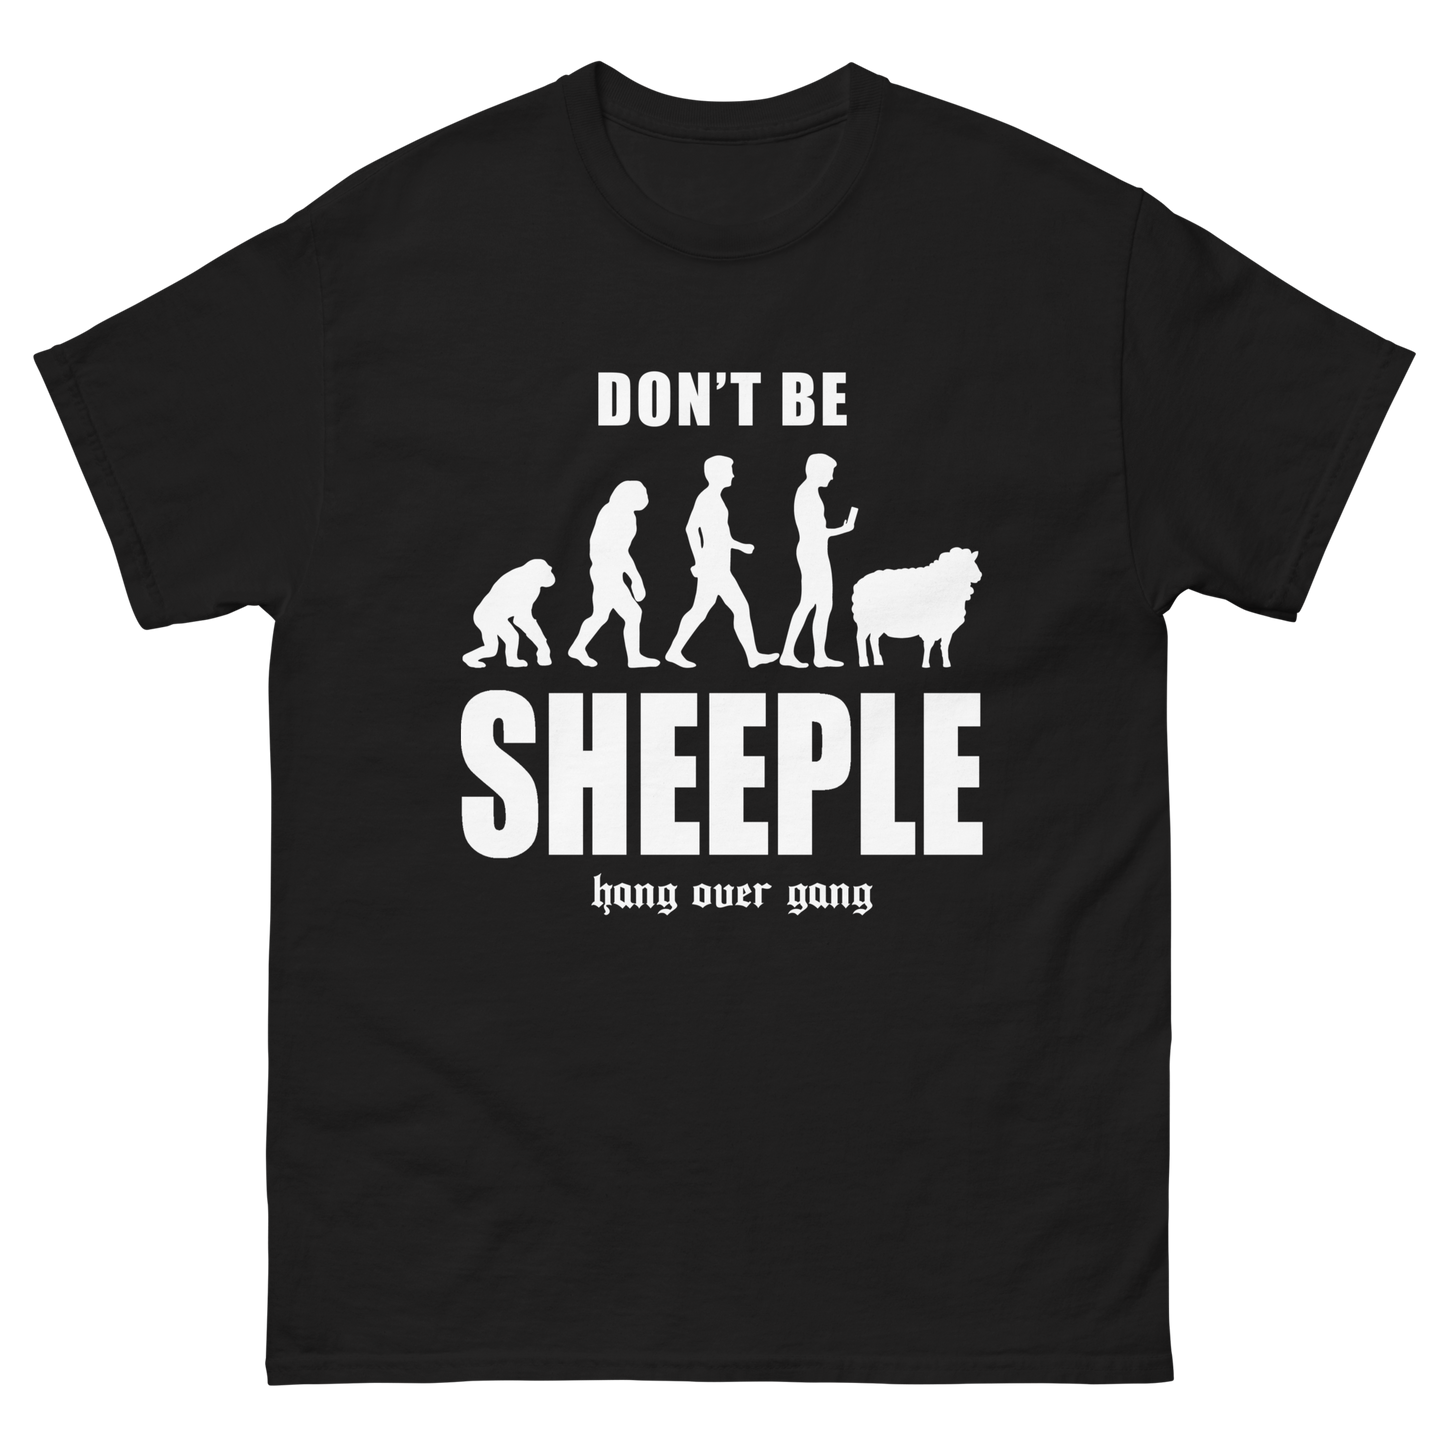 "Don't Be Sheeple" T-Shirt